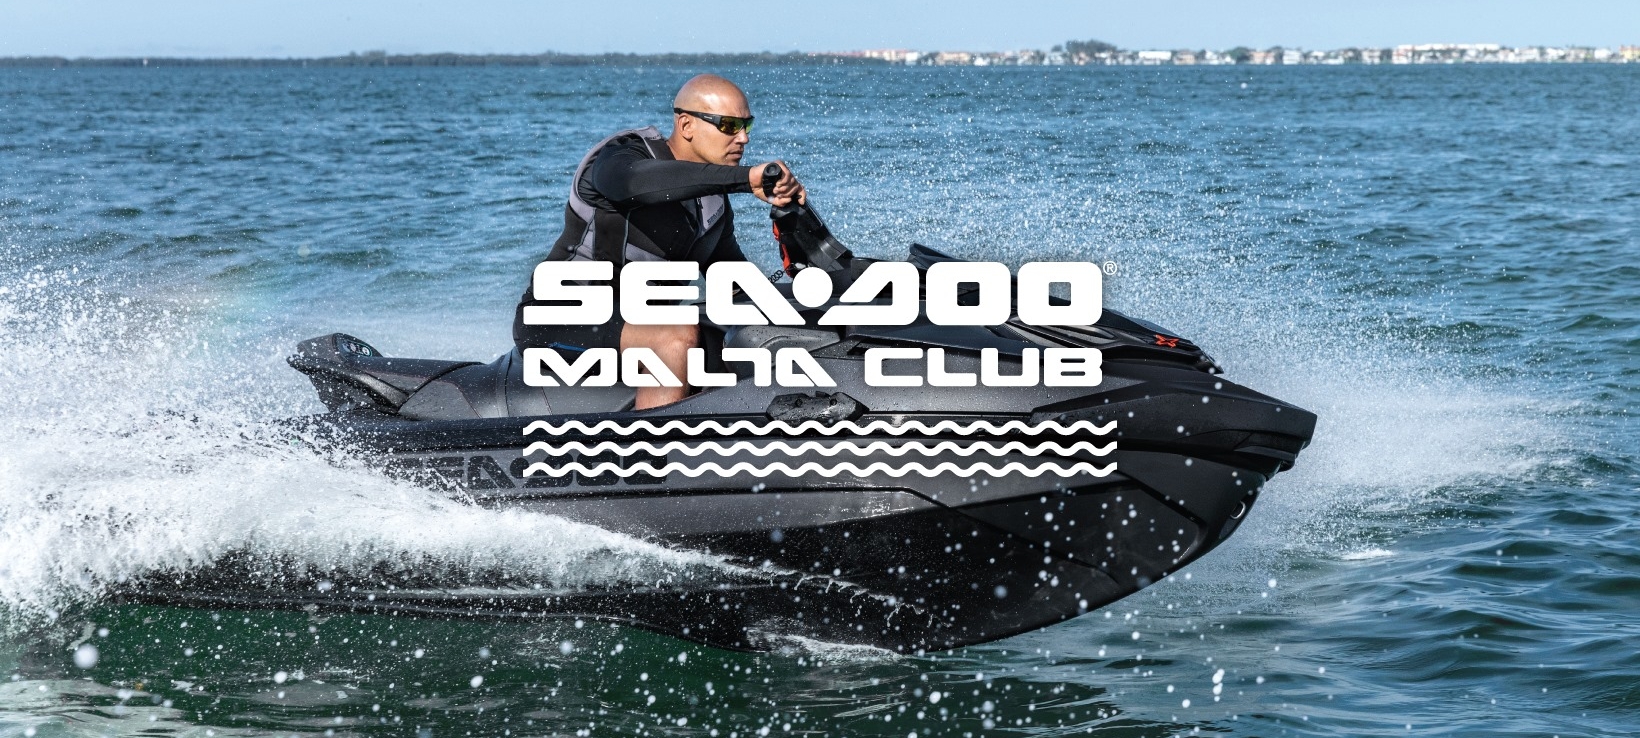 Sea-Doo Malta Club ride